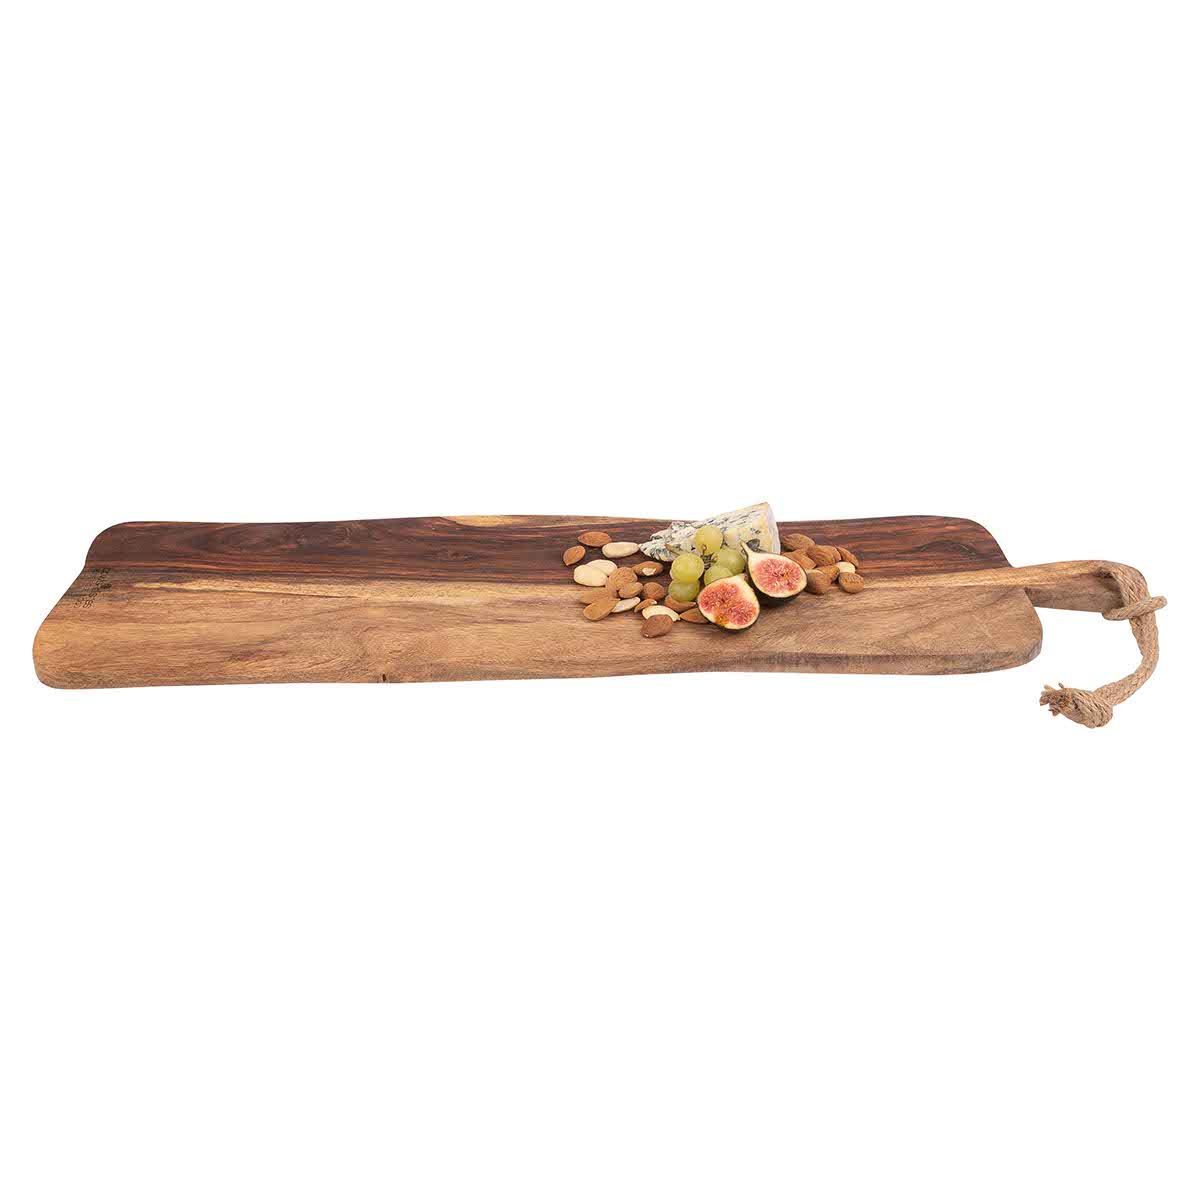 Bowls & Dishes Rose Wood serveerplank Rustiek met handvat - 69cm